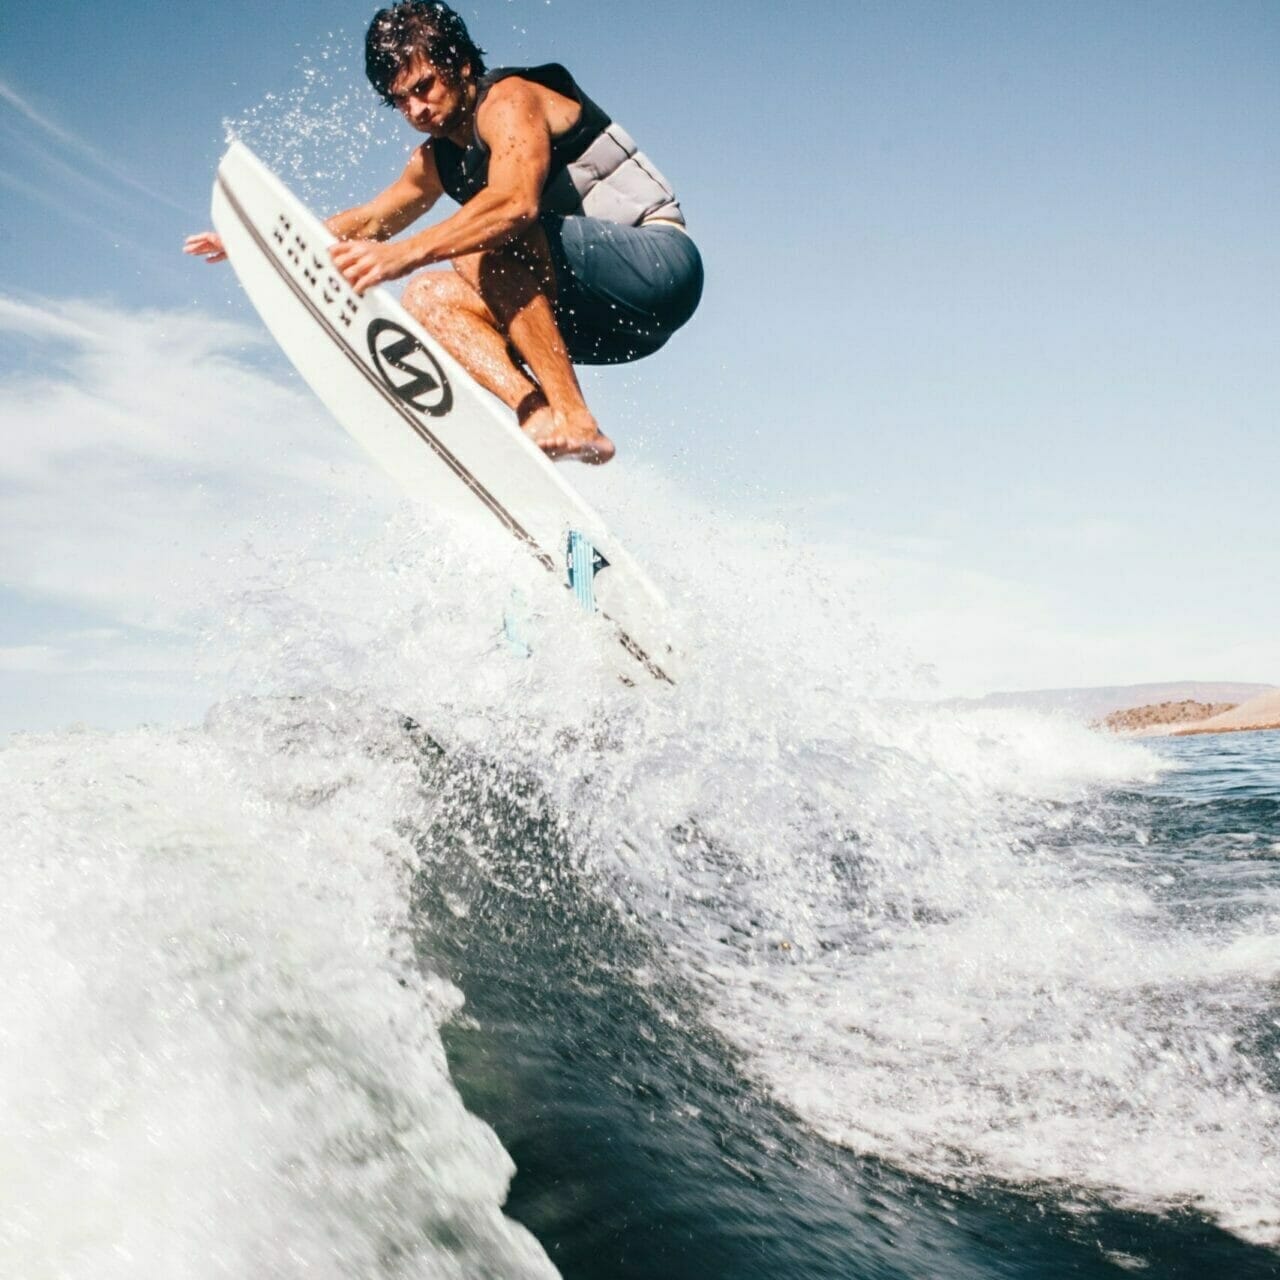 A man riding a Supreme surfboard in the air.